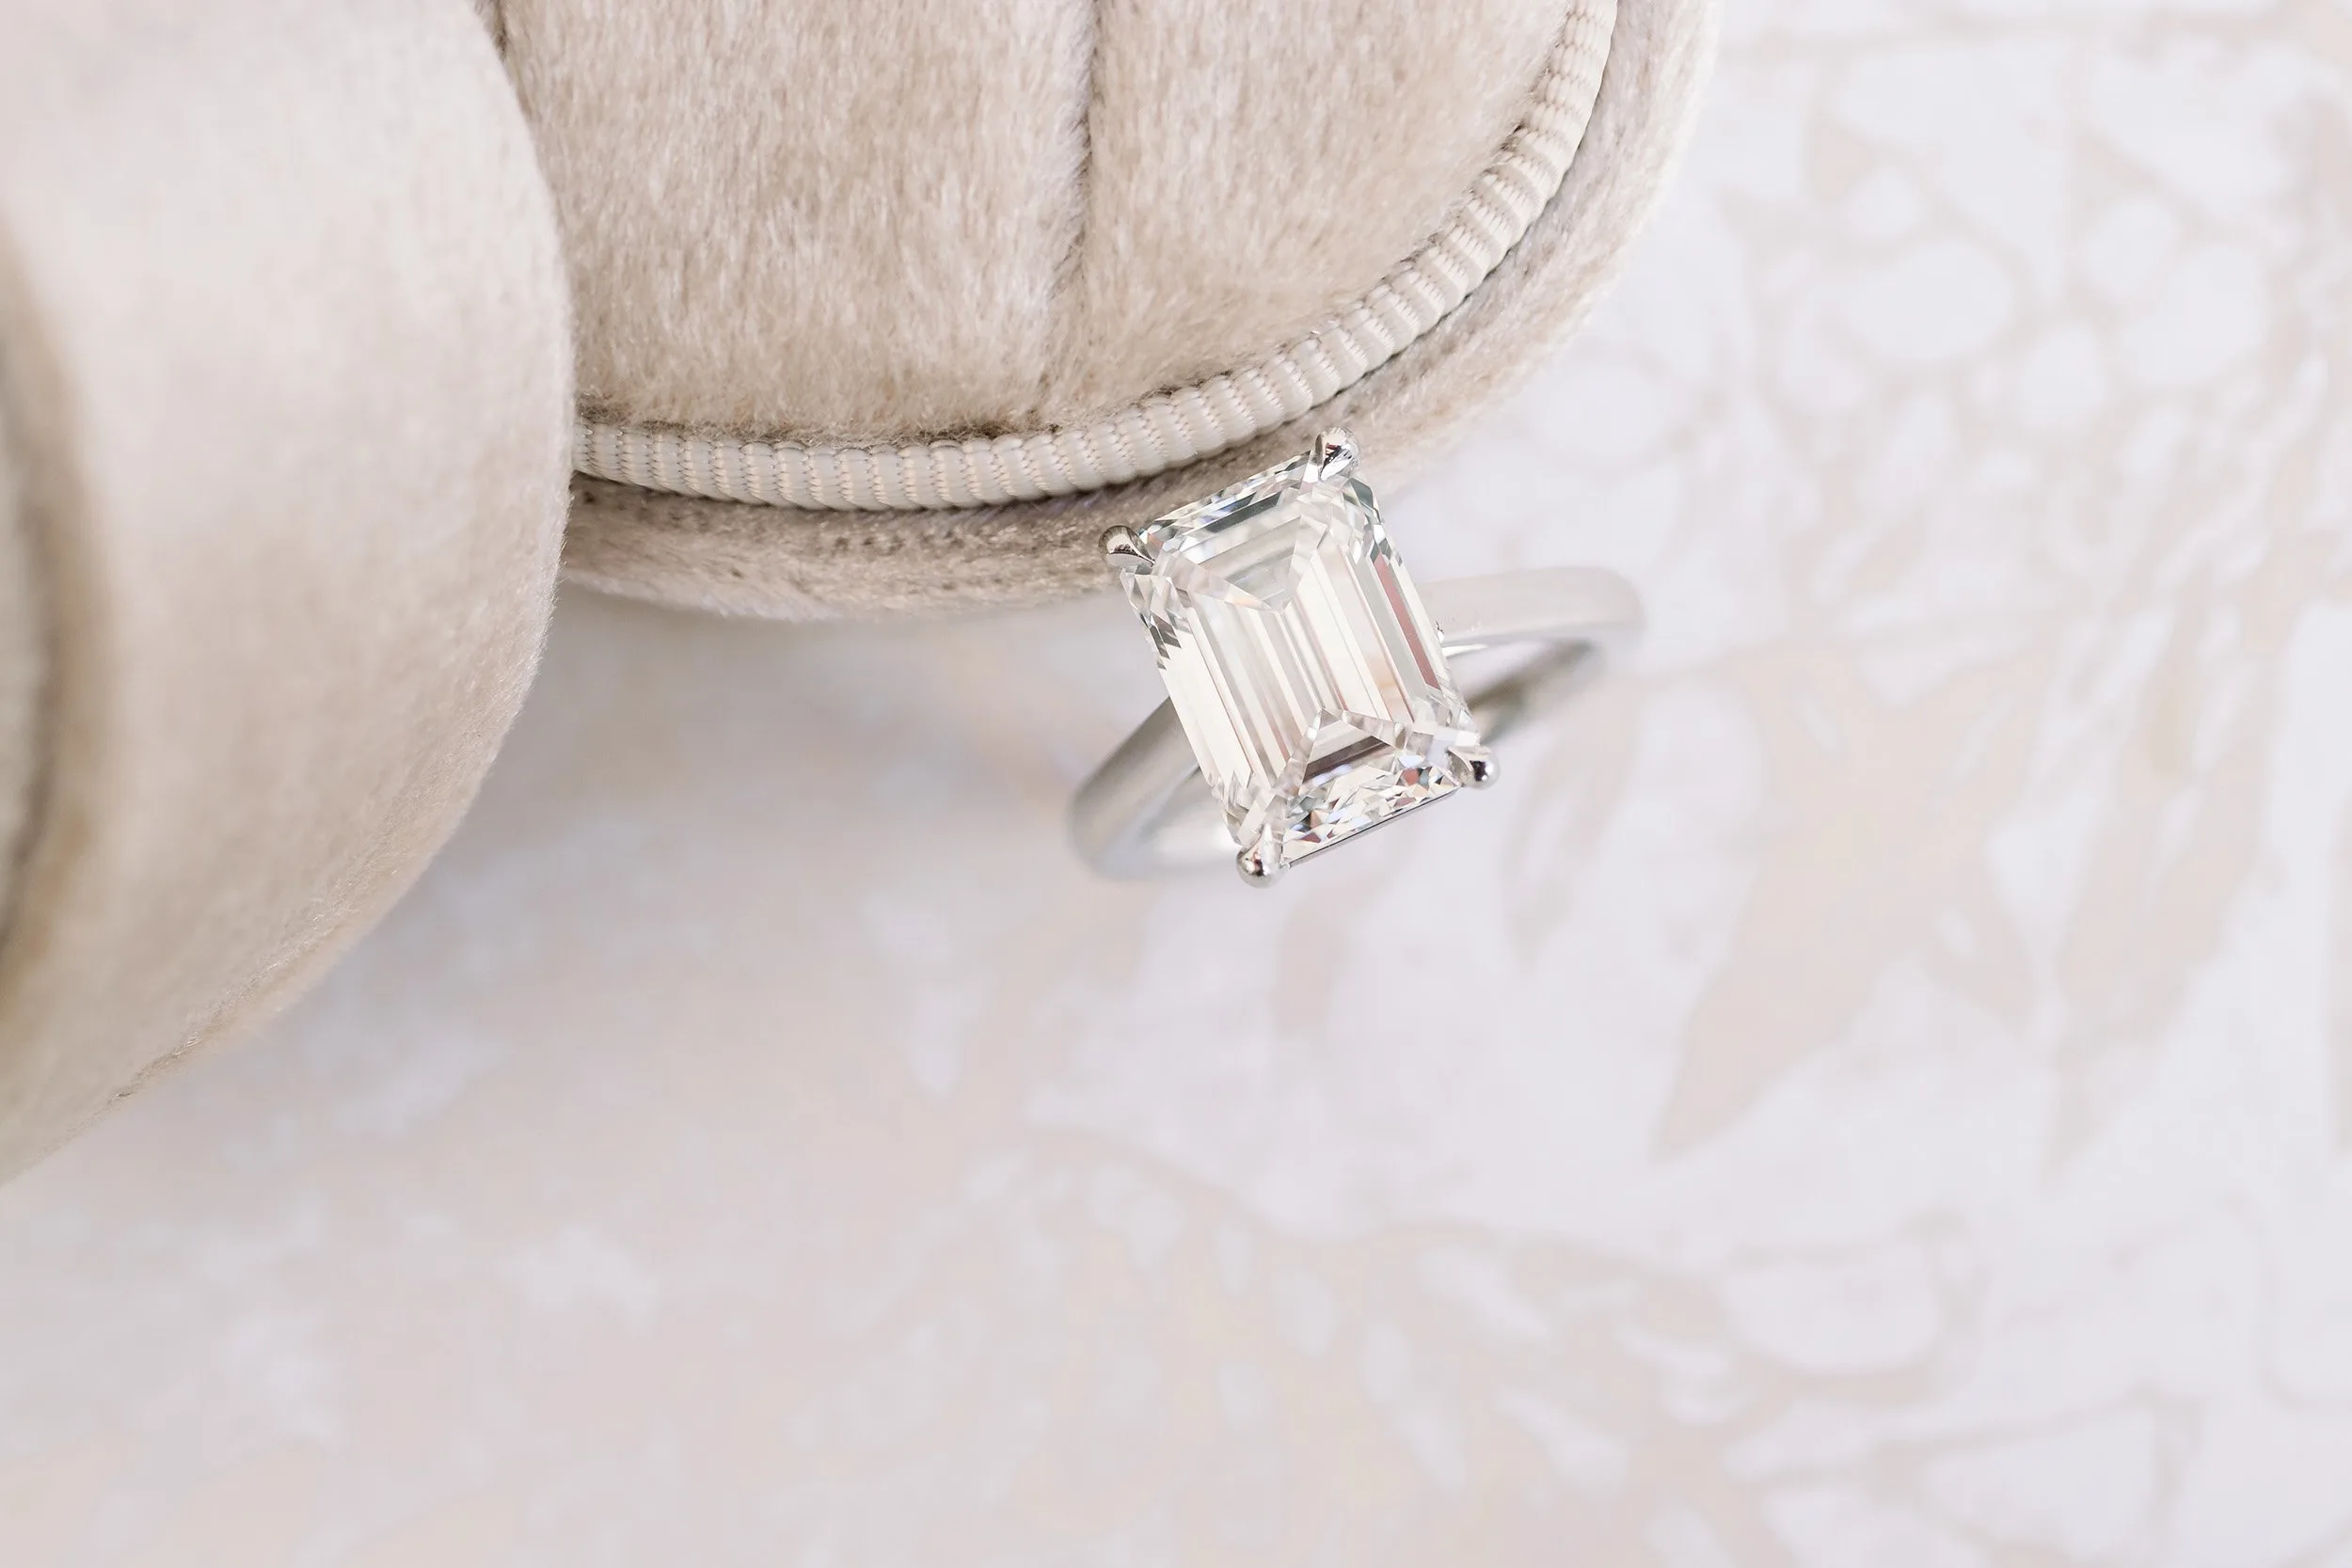 5 carat emerald cut cathedral lab diamond solitaire engagement ring in platinum